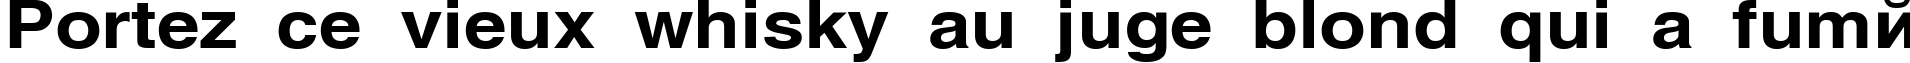 Пример написания шрифтом AGHlvCyrillic Bold115b текста на французском